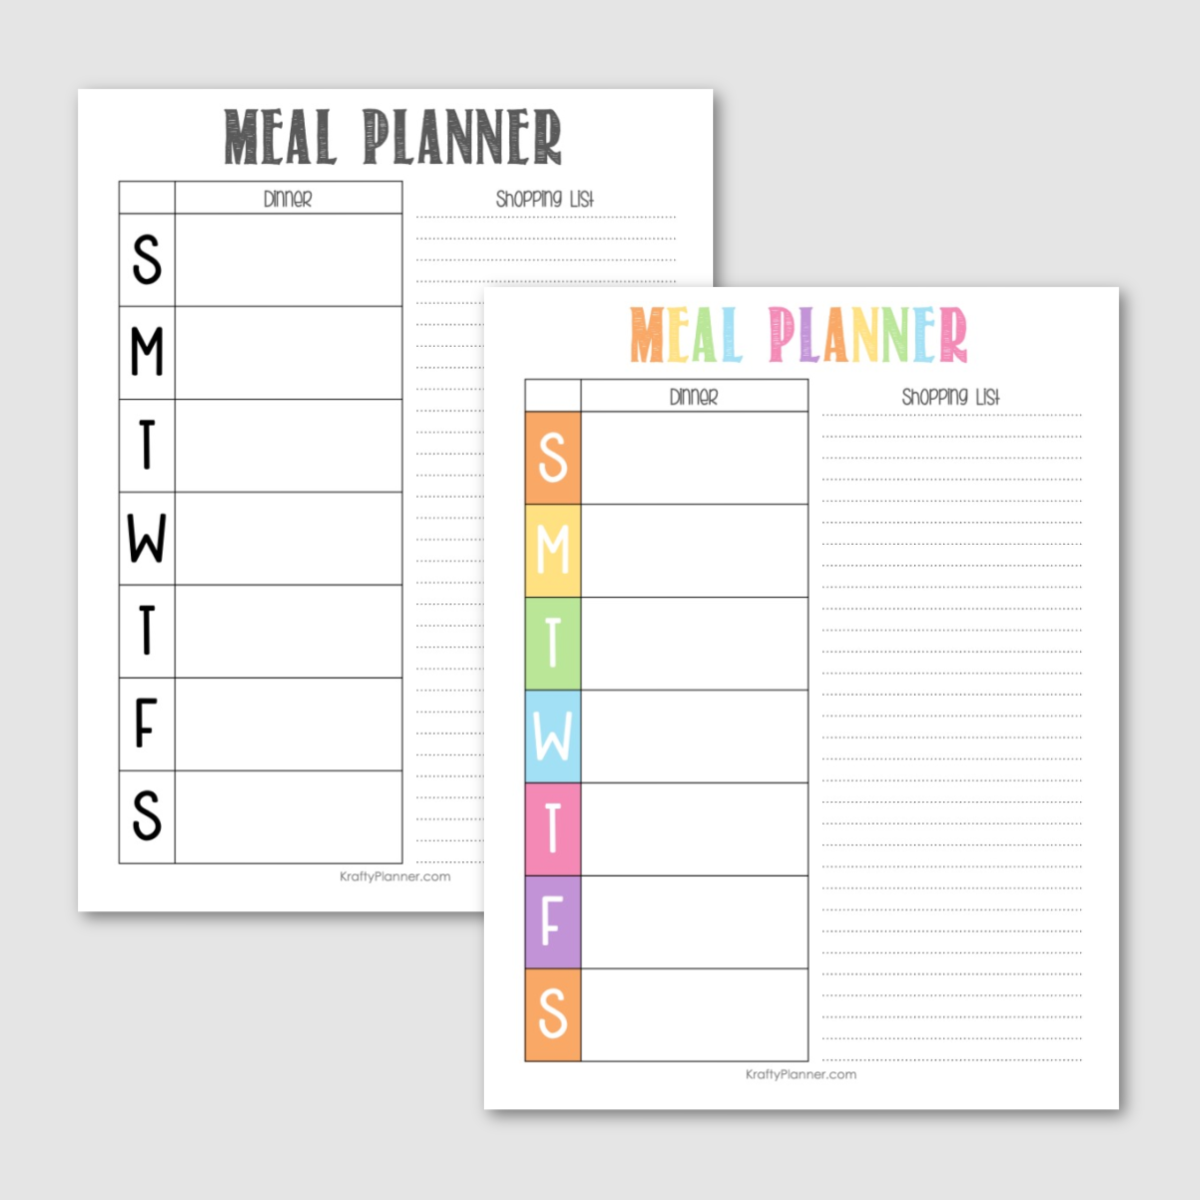 Free Printable Meal Planner